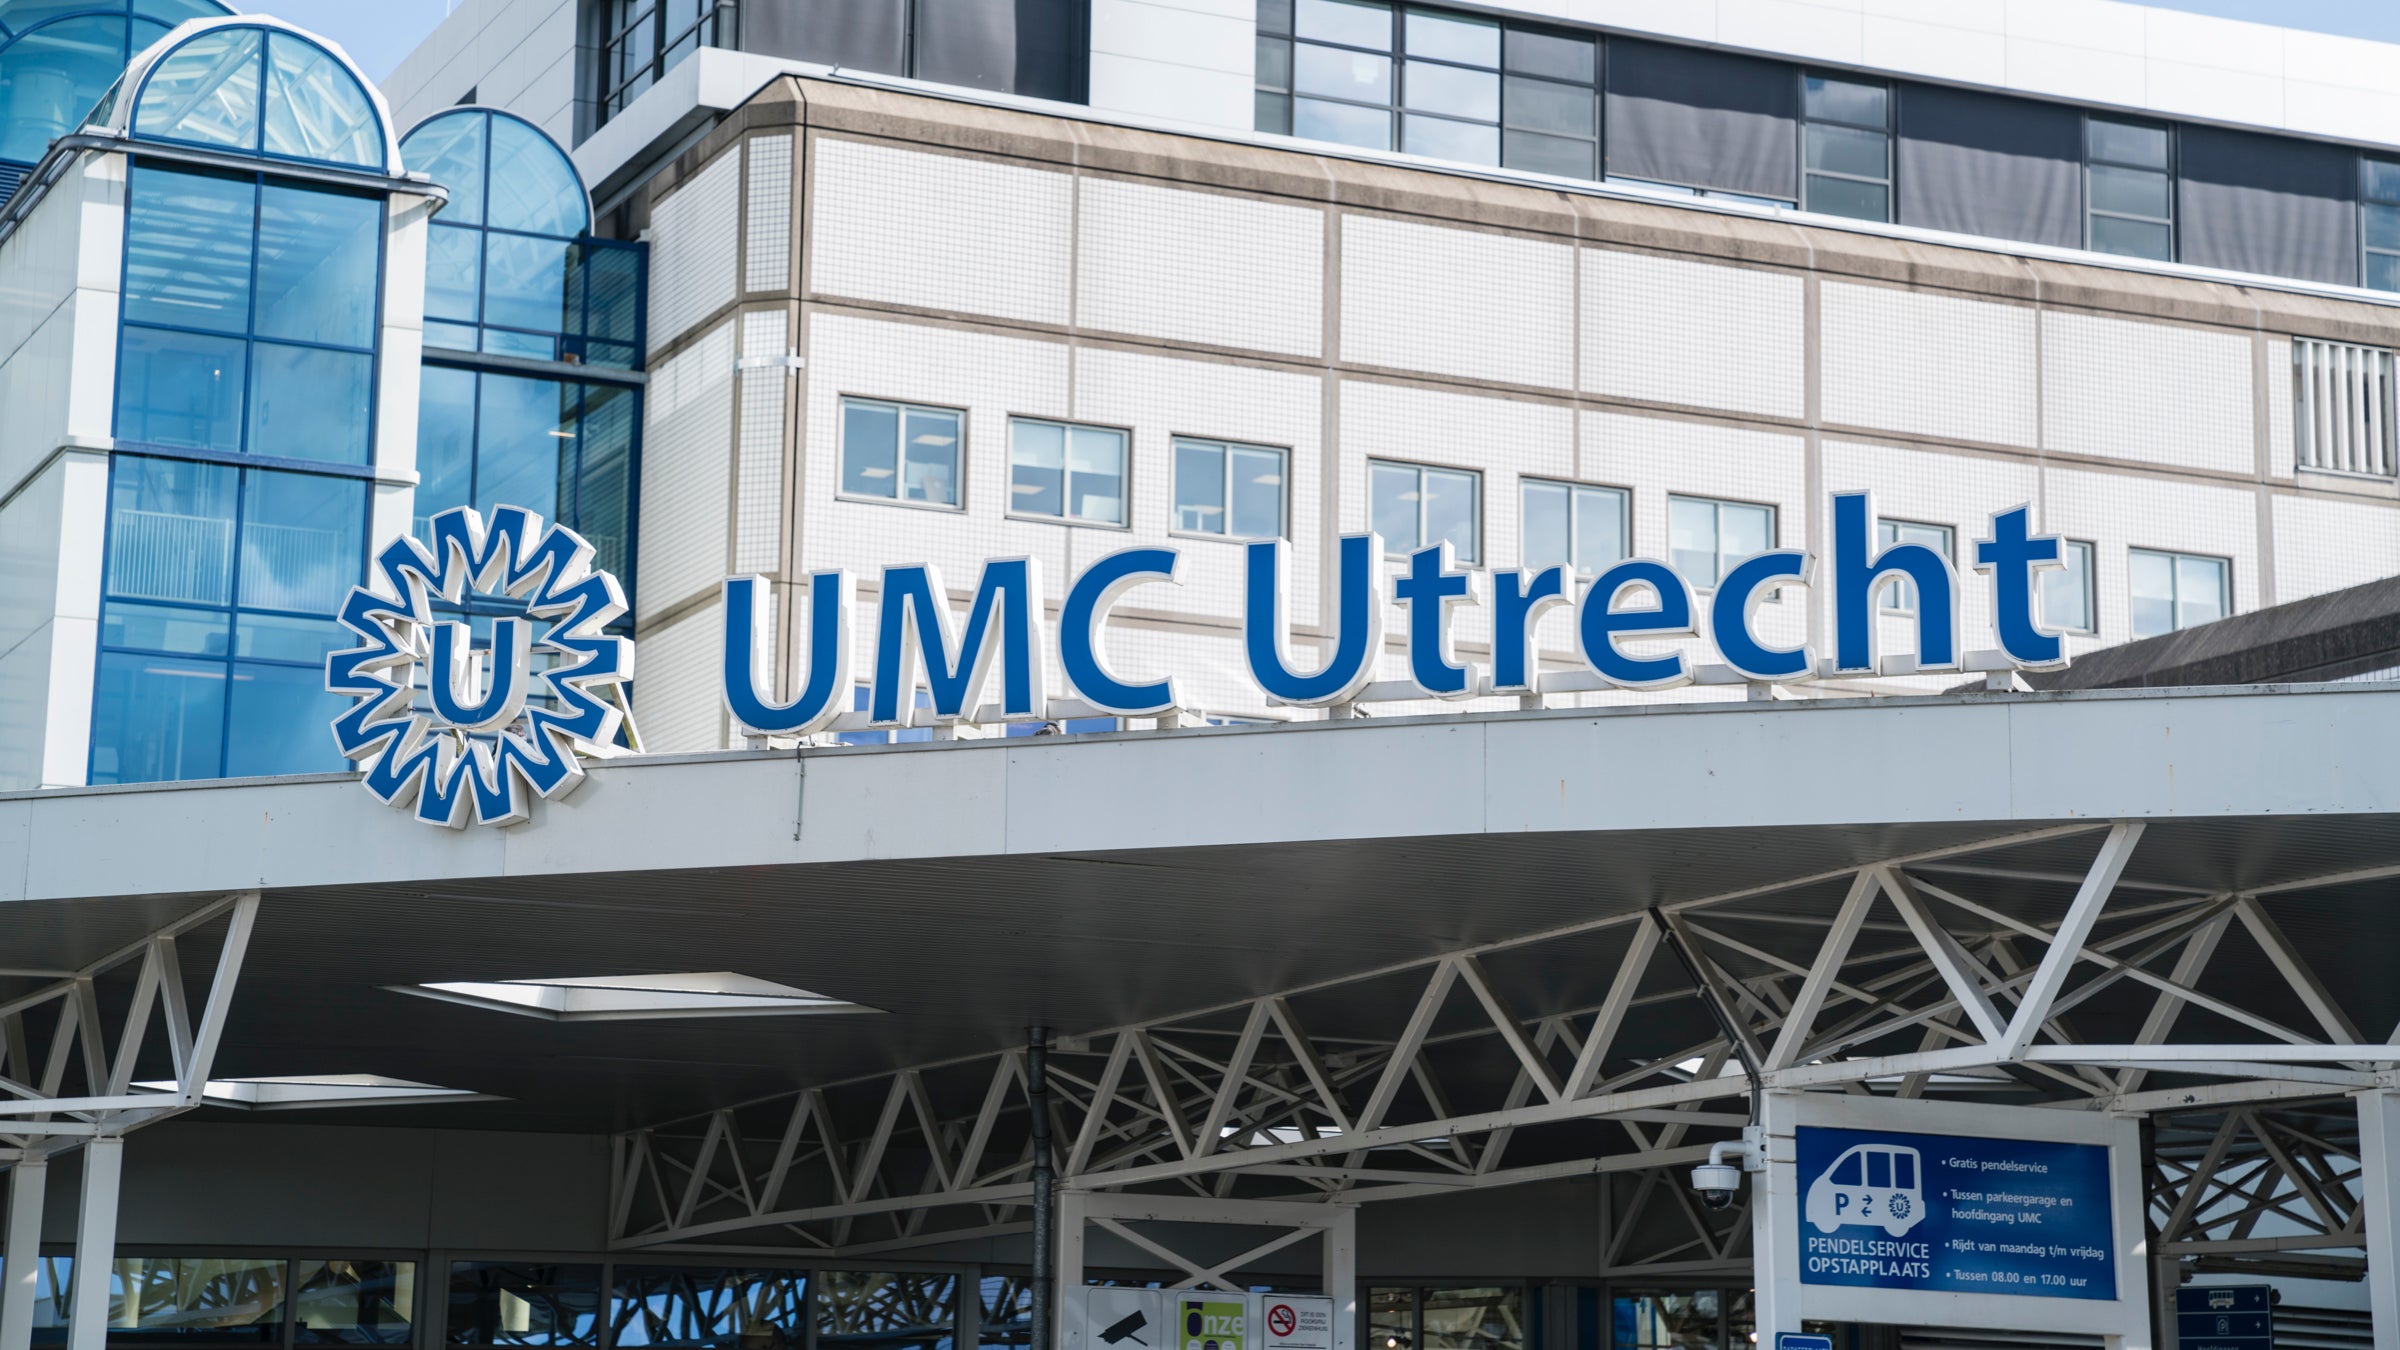 Ingang UMC Utrecht